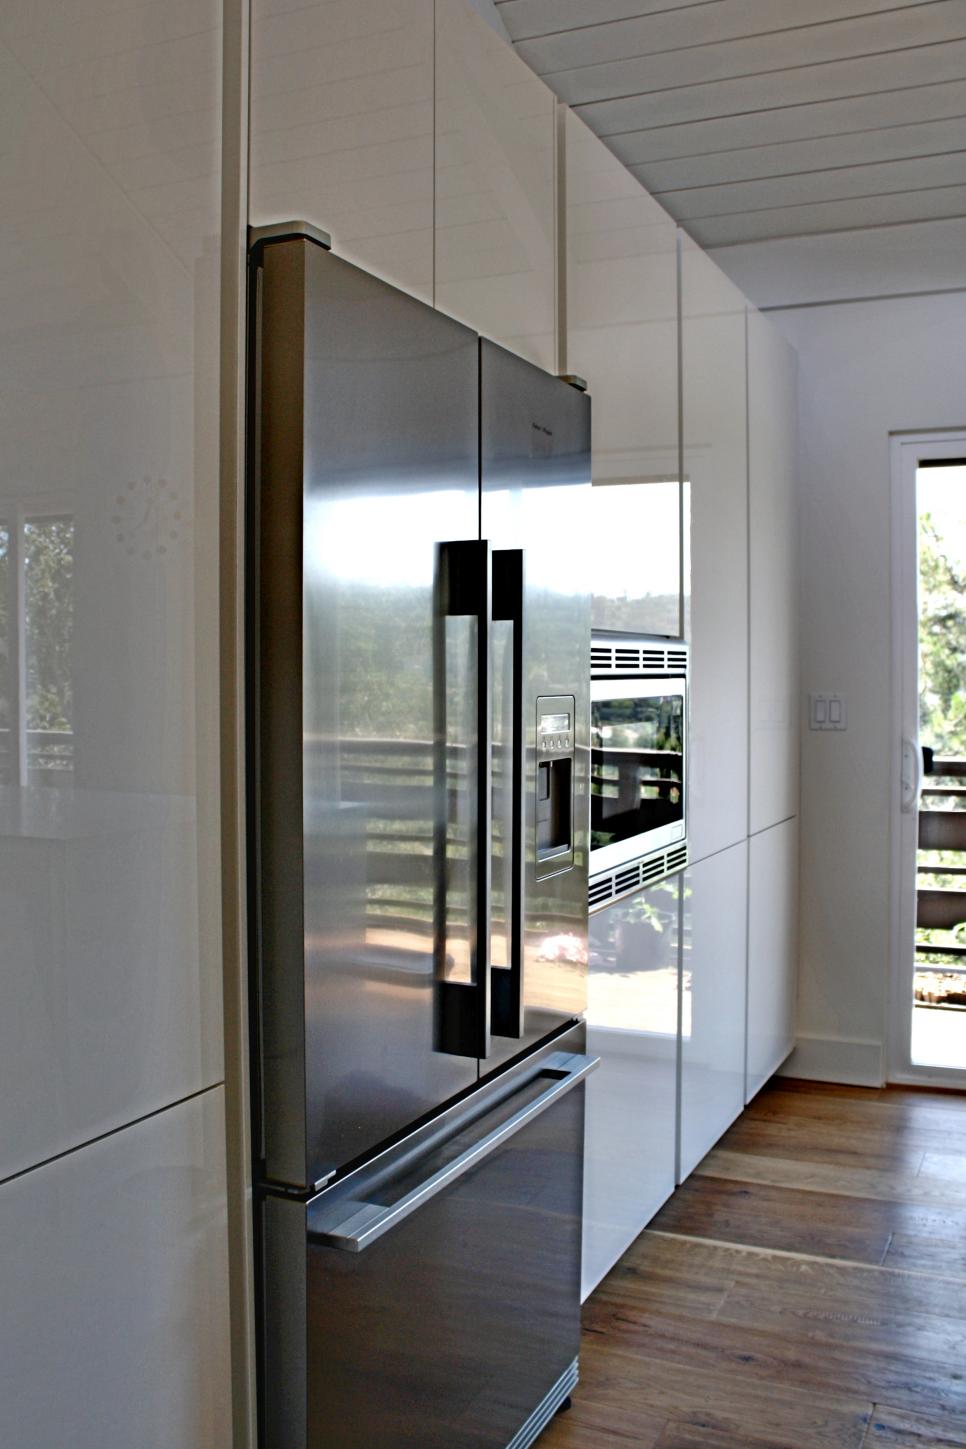 Stainless Refrigerator and Sleek Cabinets in Modern Kitchen | HGTV